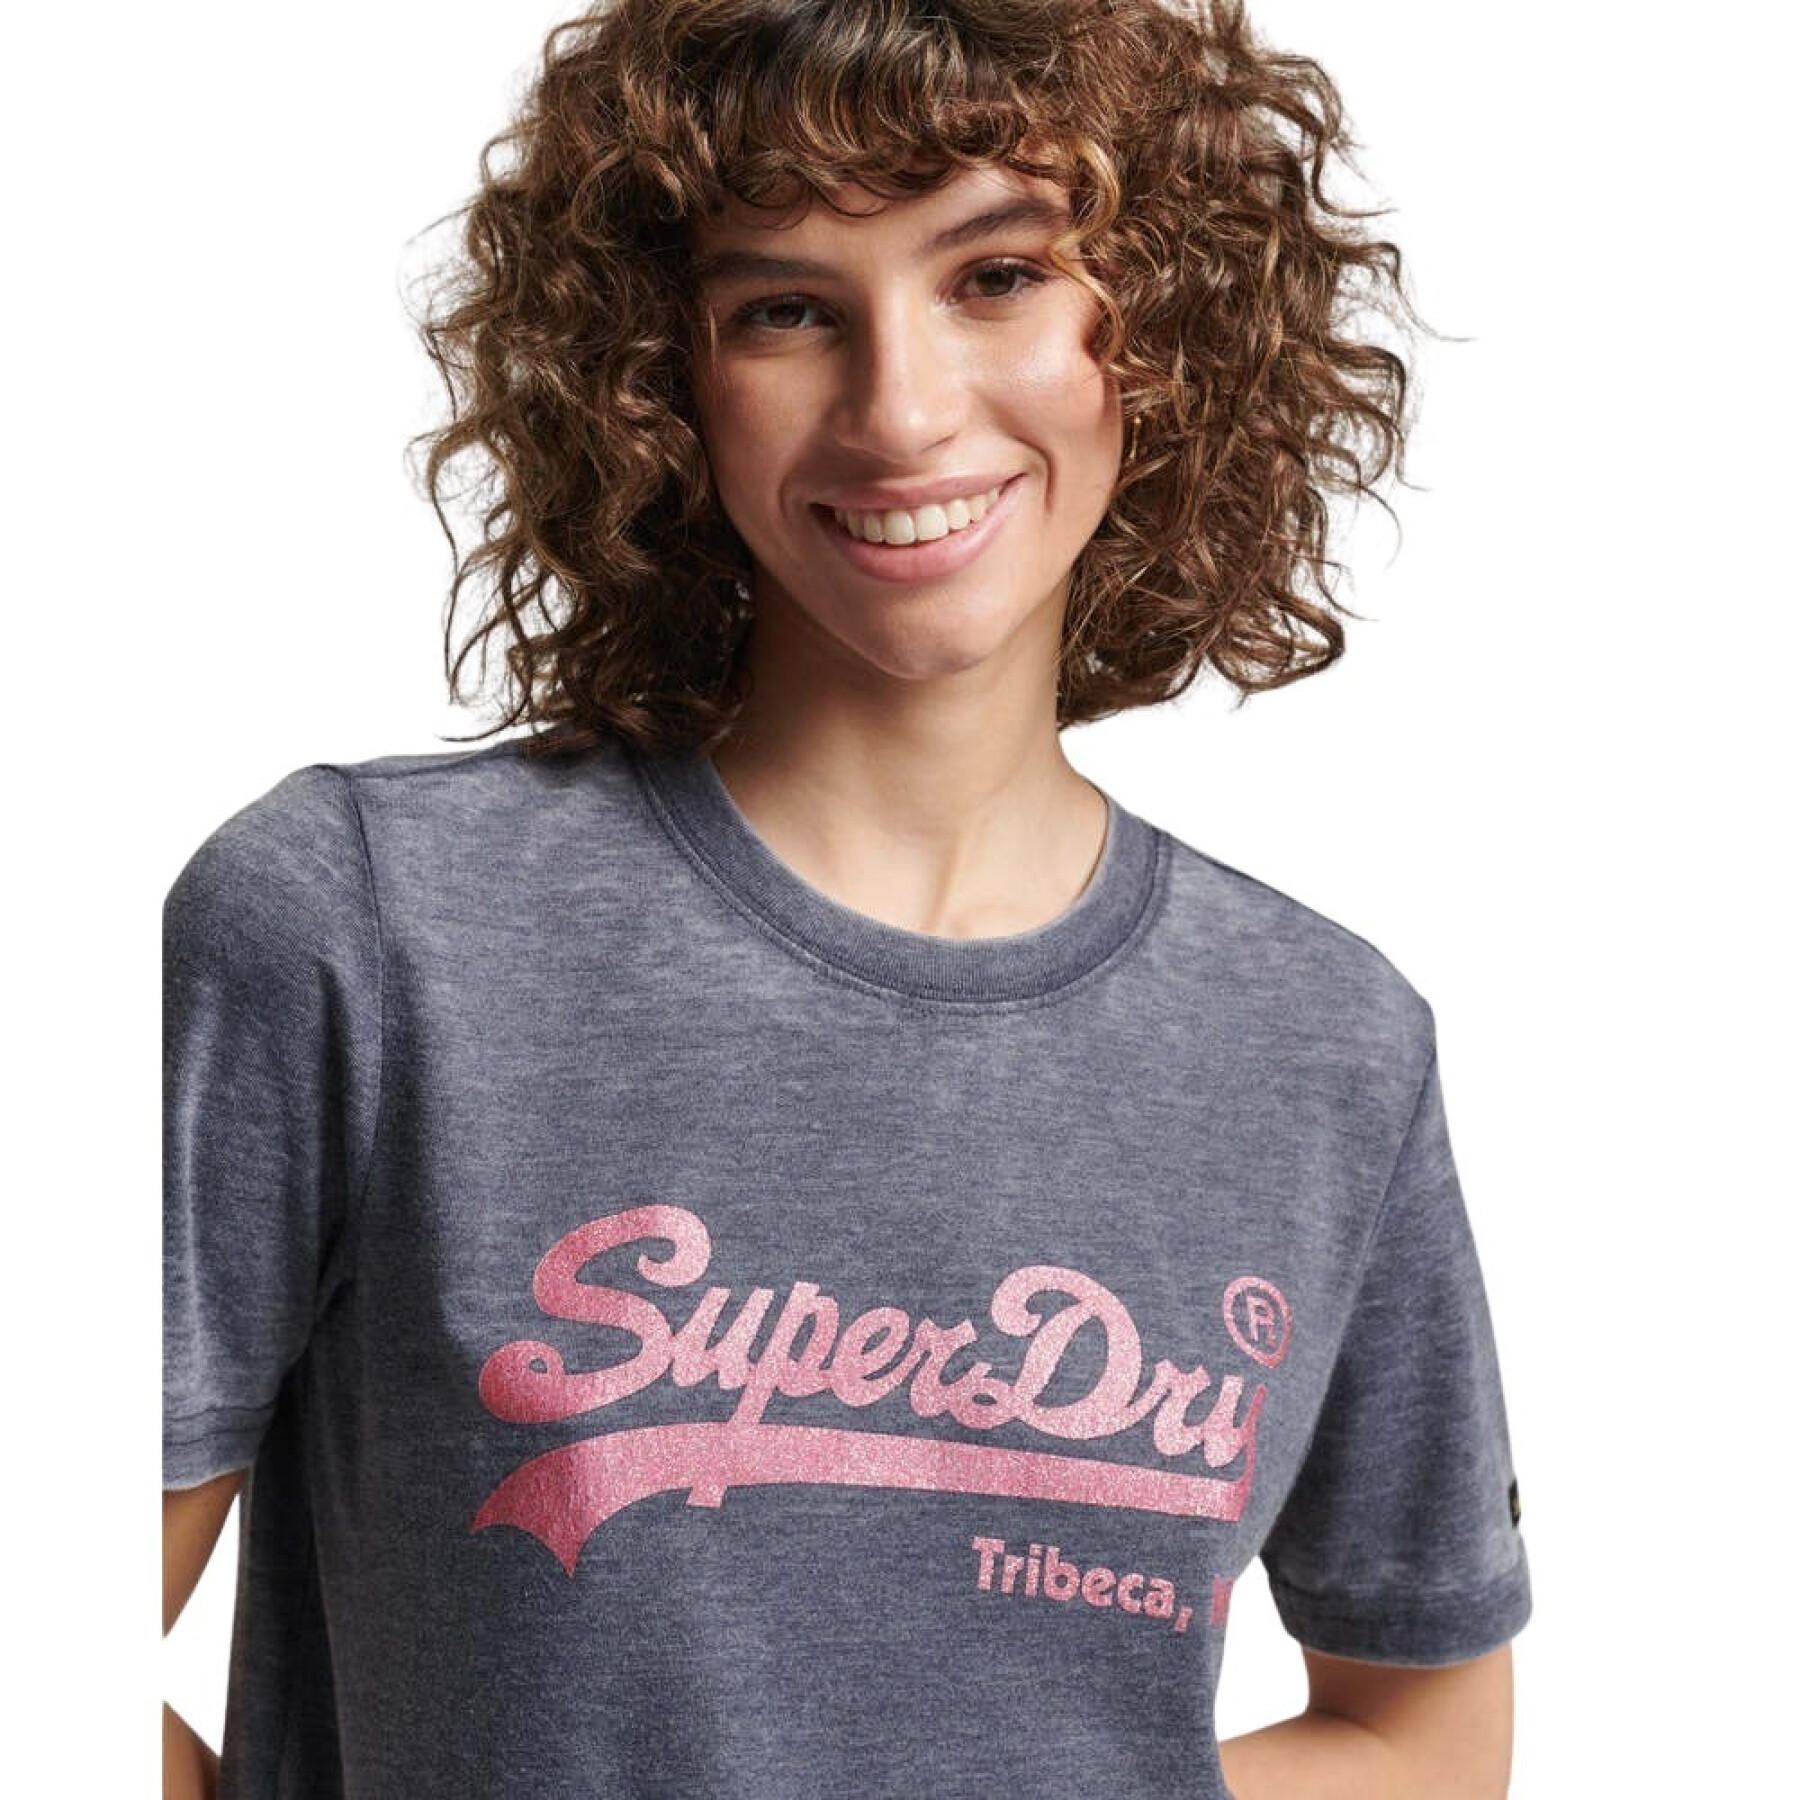 Embellished - Tops Vl T-shirts Women\'s Tank Clothing - Superdry Women & - T-shirt